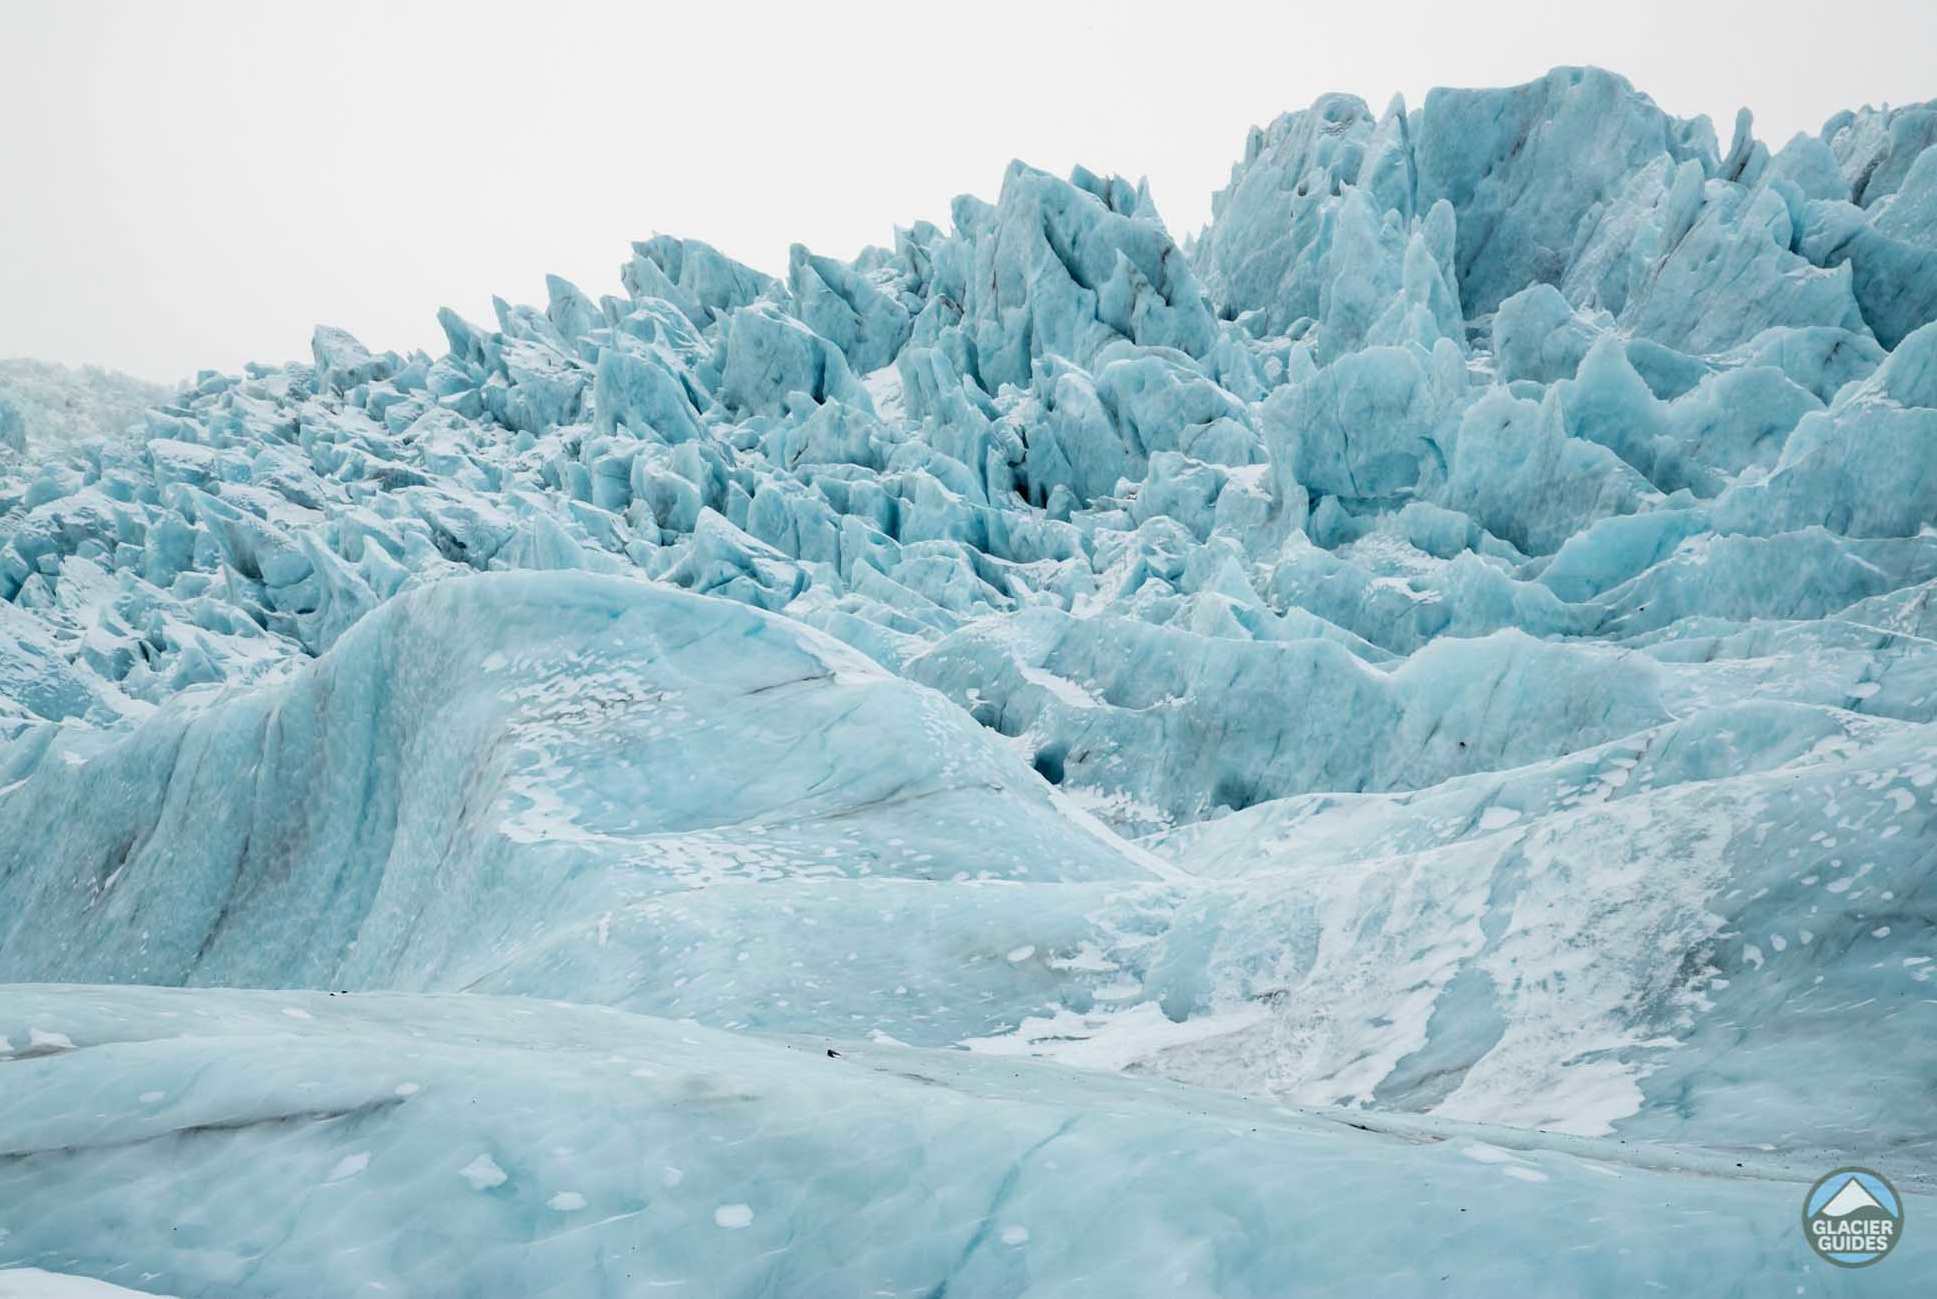 Vatnajokull, the largest glacier in Europe